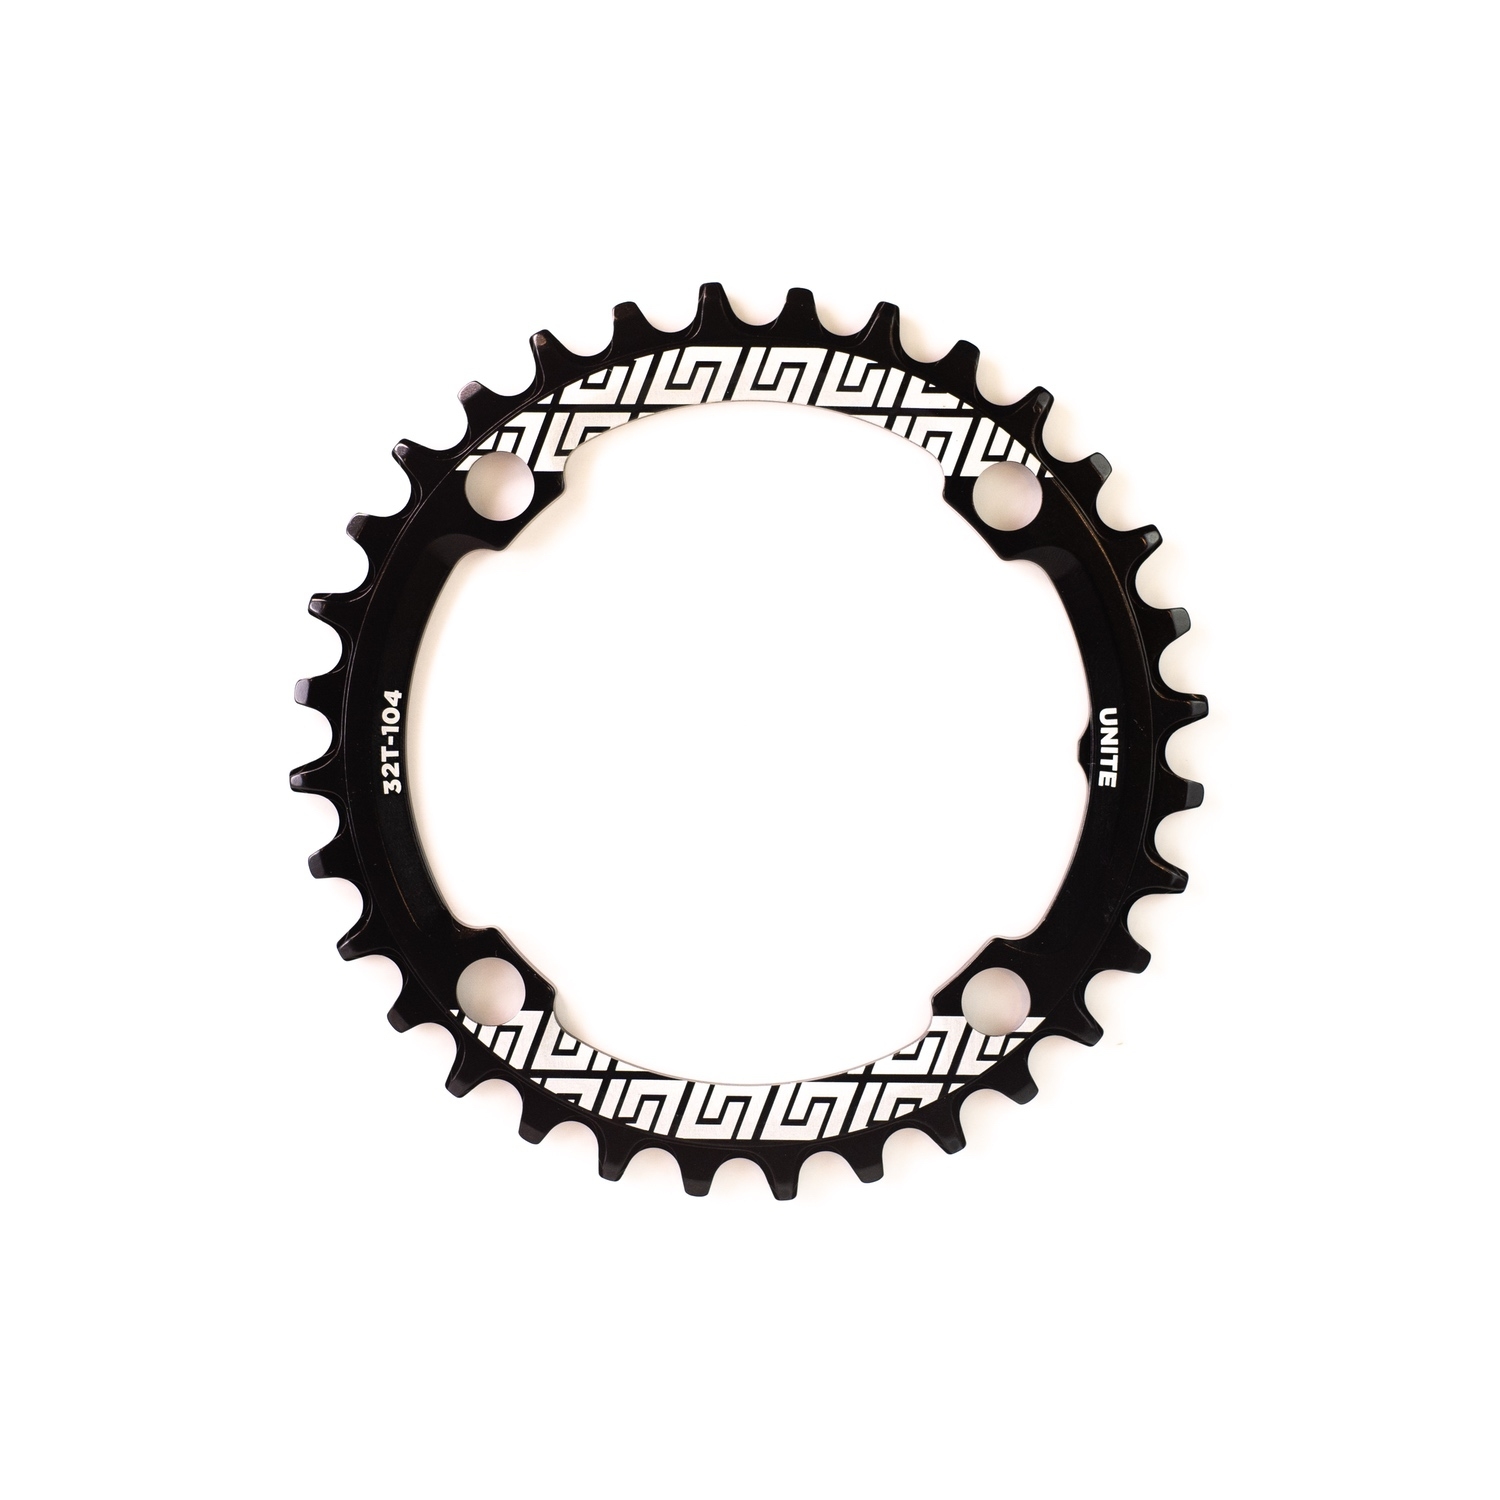 Unite Chain Ring – 104 BCD Black 32T